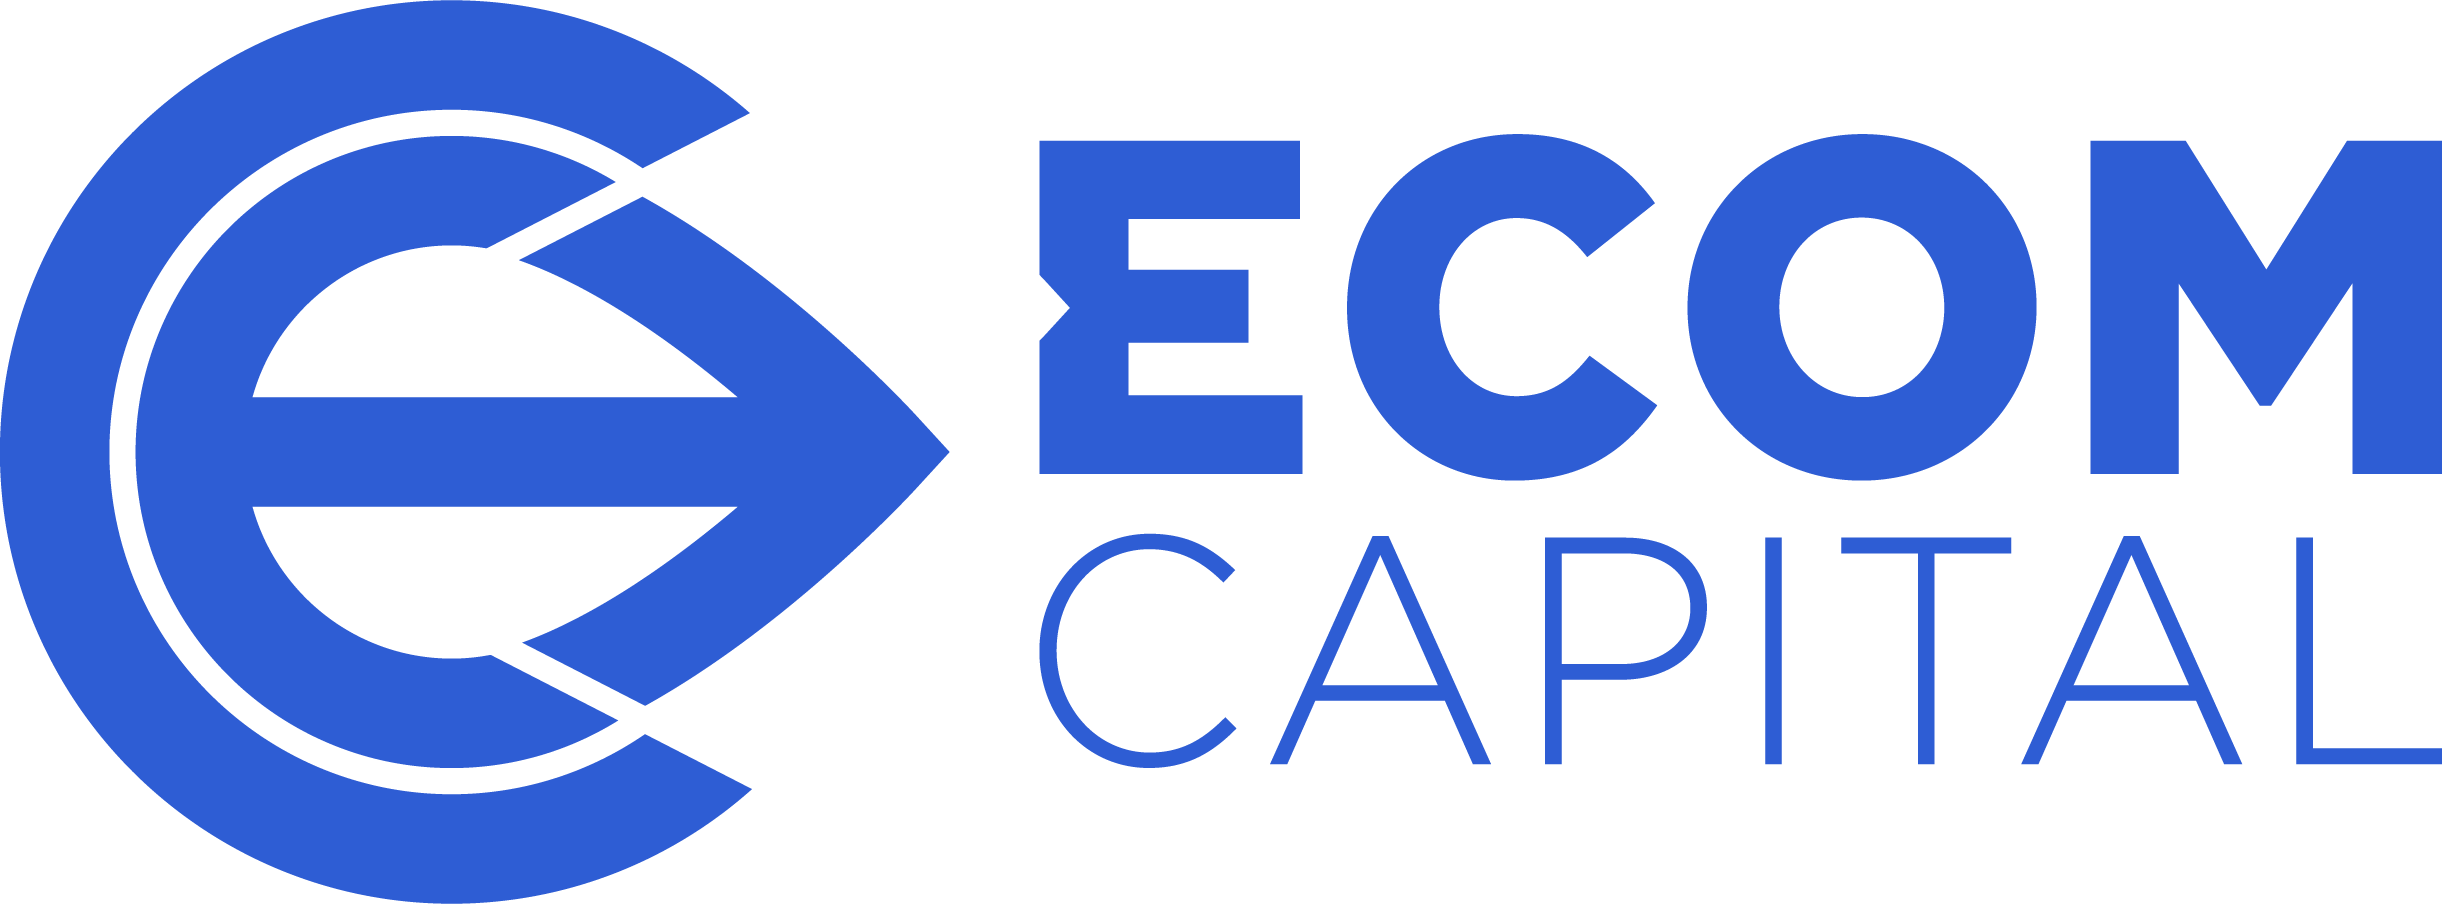 eCom Capital Reviews | Bizoforce Innovation Platform